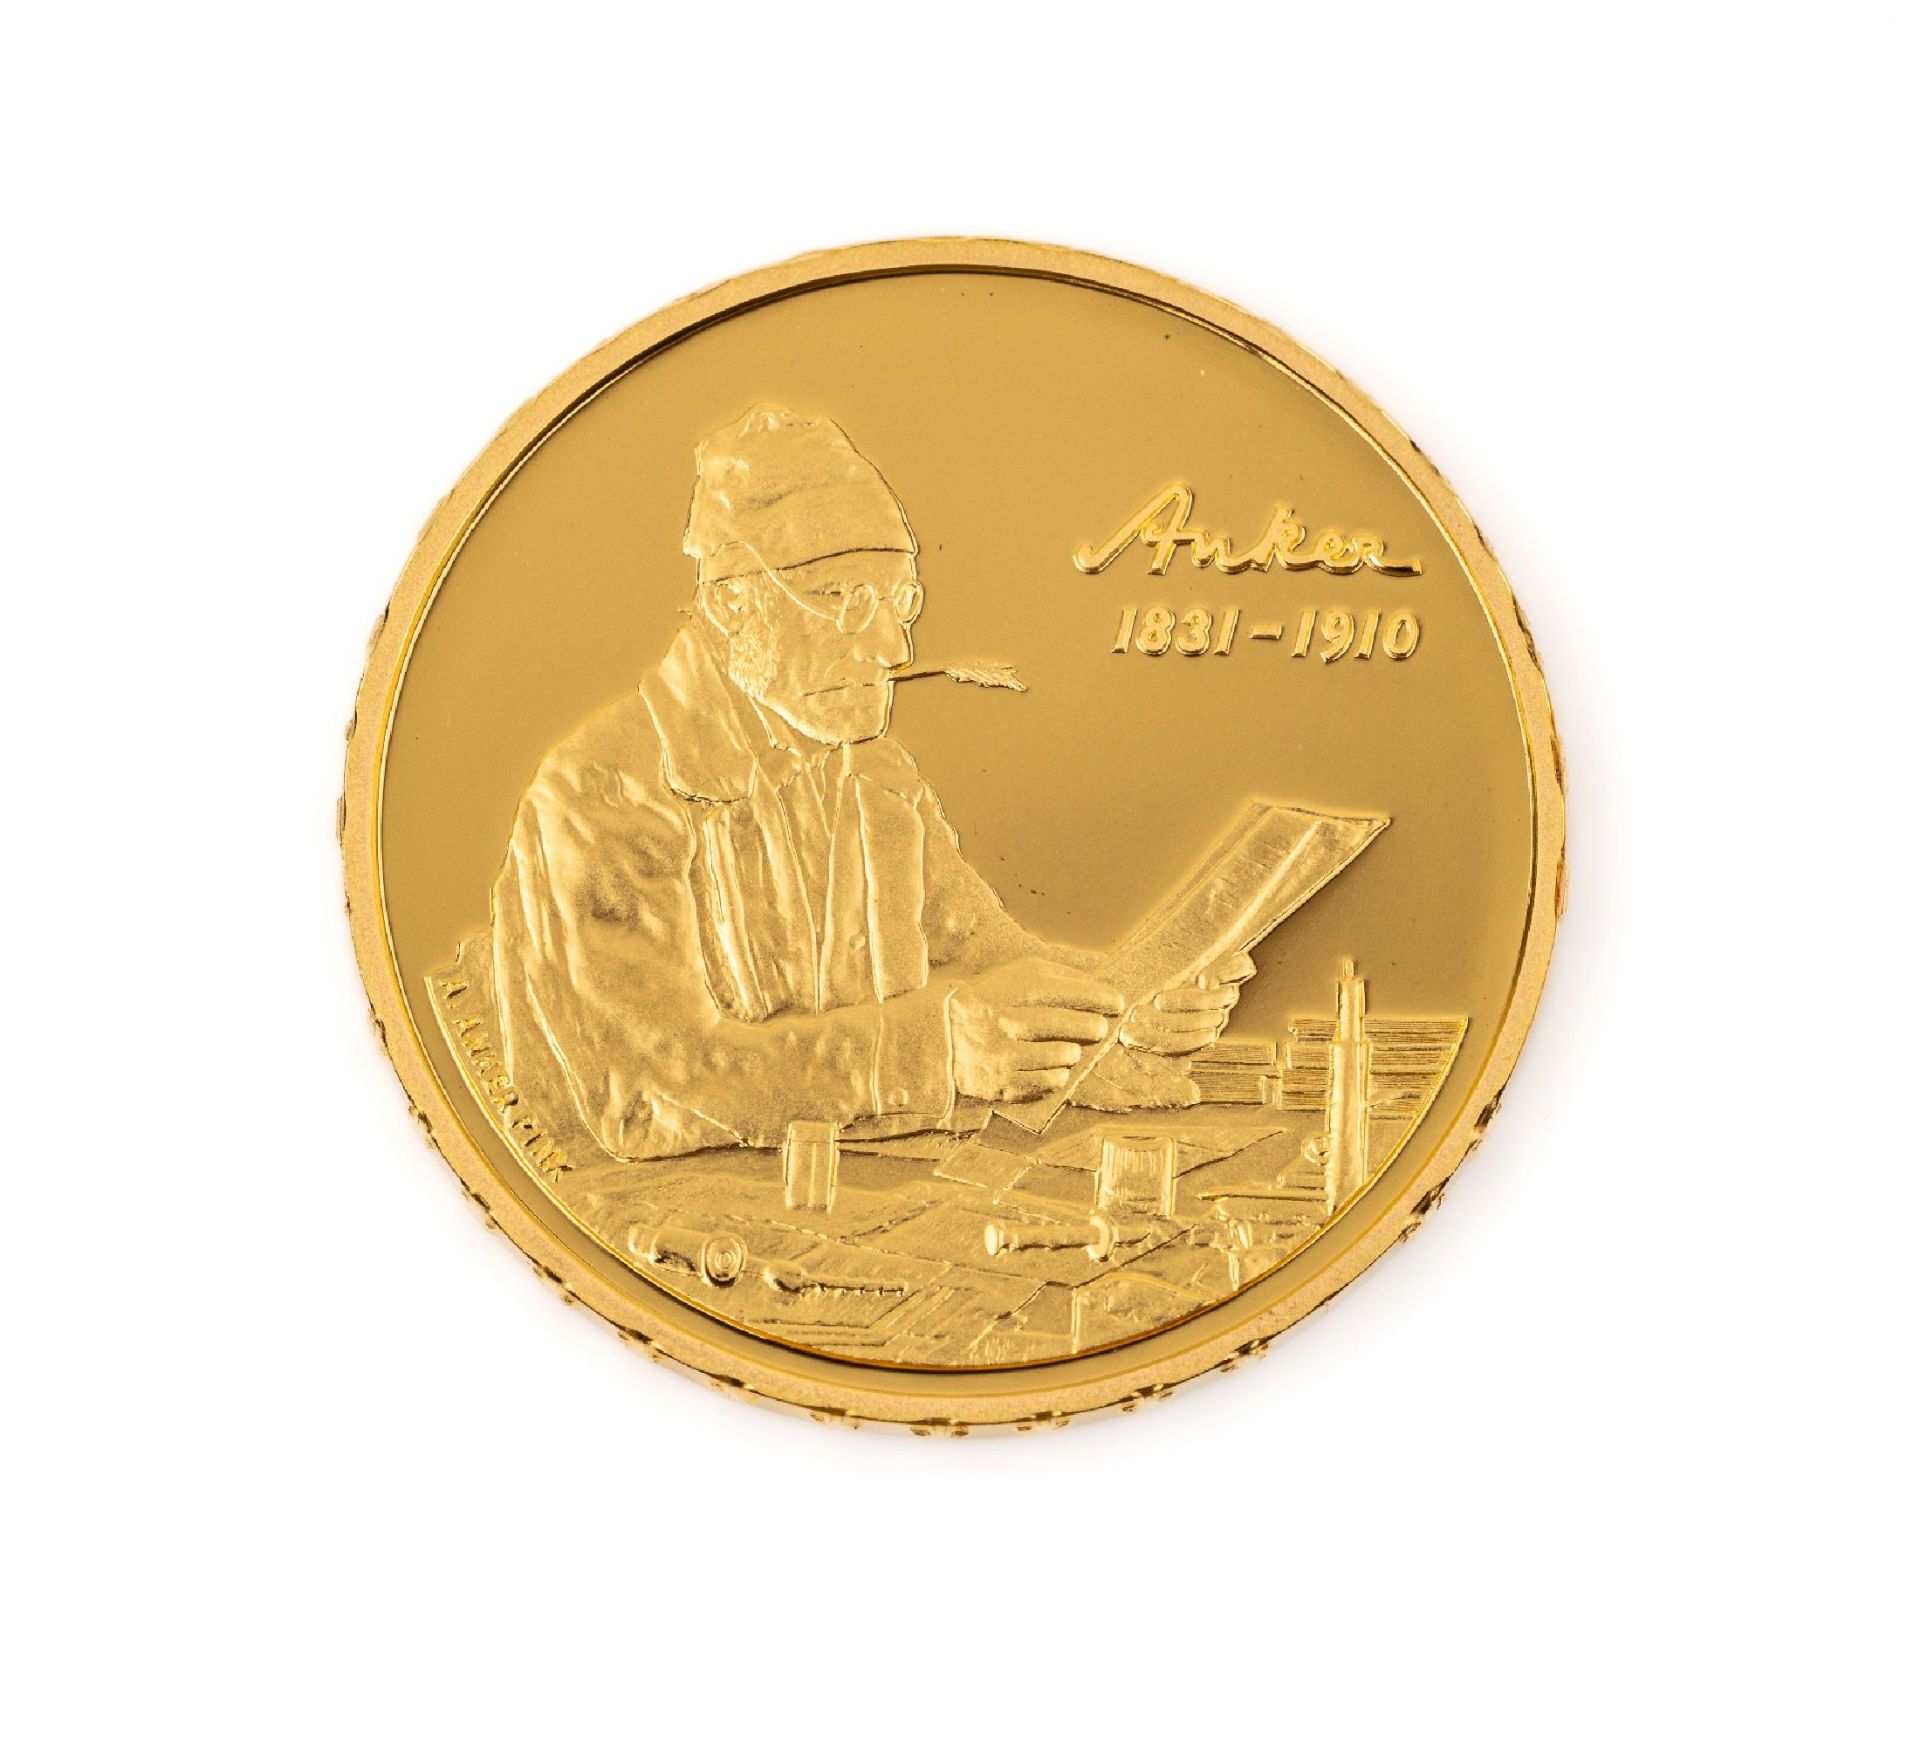 Goldmünze 50 Franken, Schweiz 2010, zum 100. Todestag